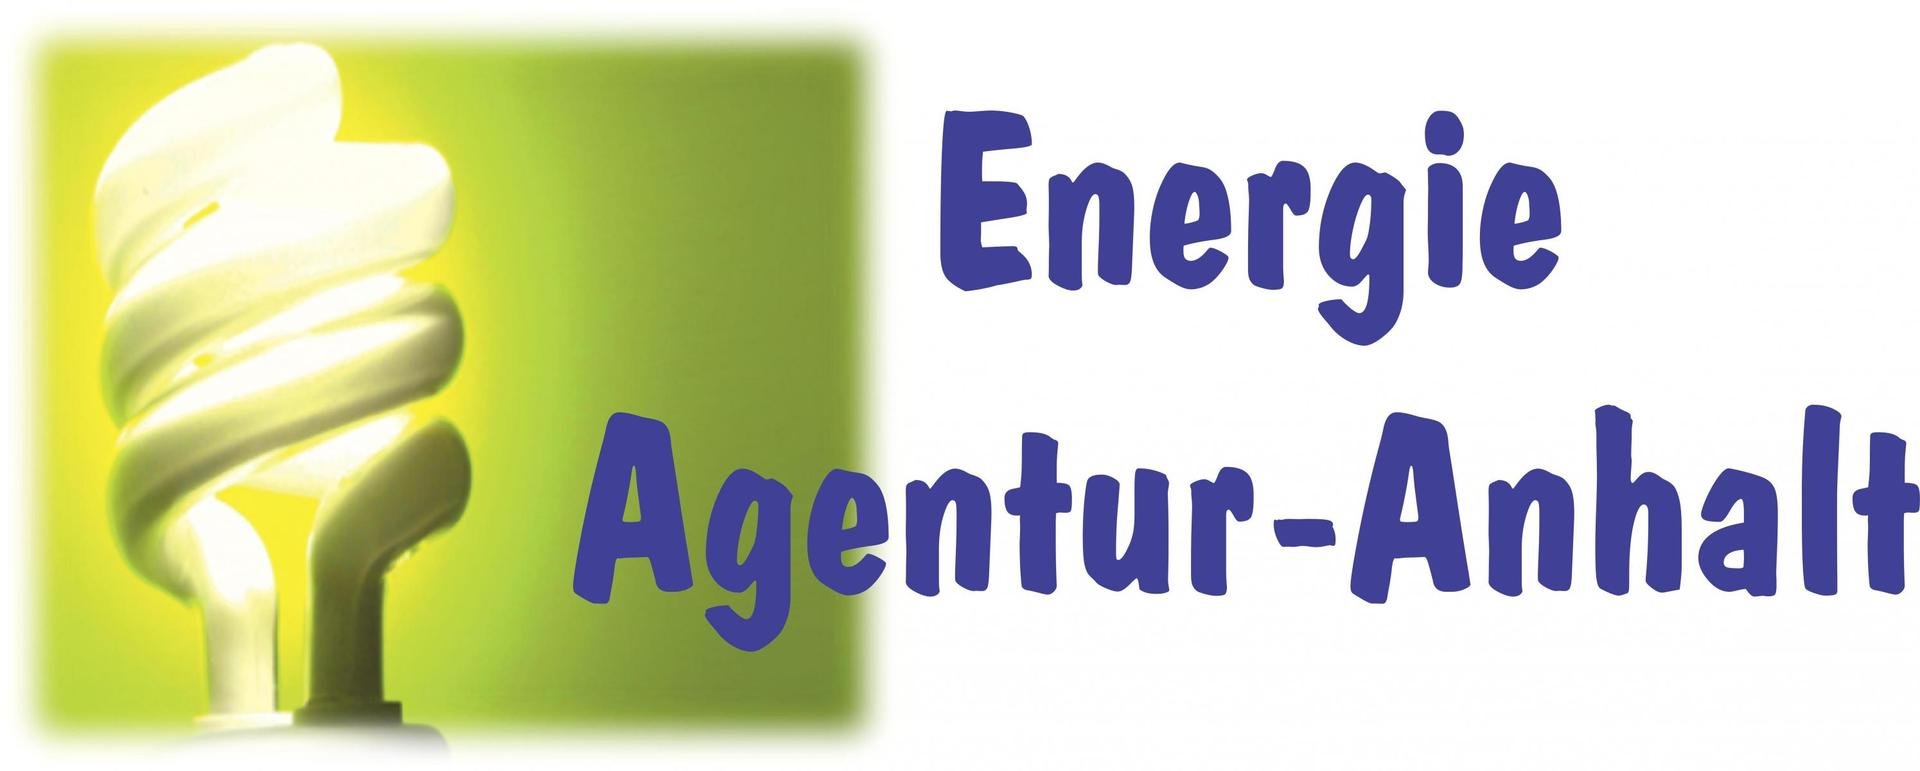 Energie-Agentur-Anhalt Logo